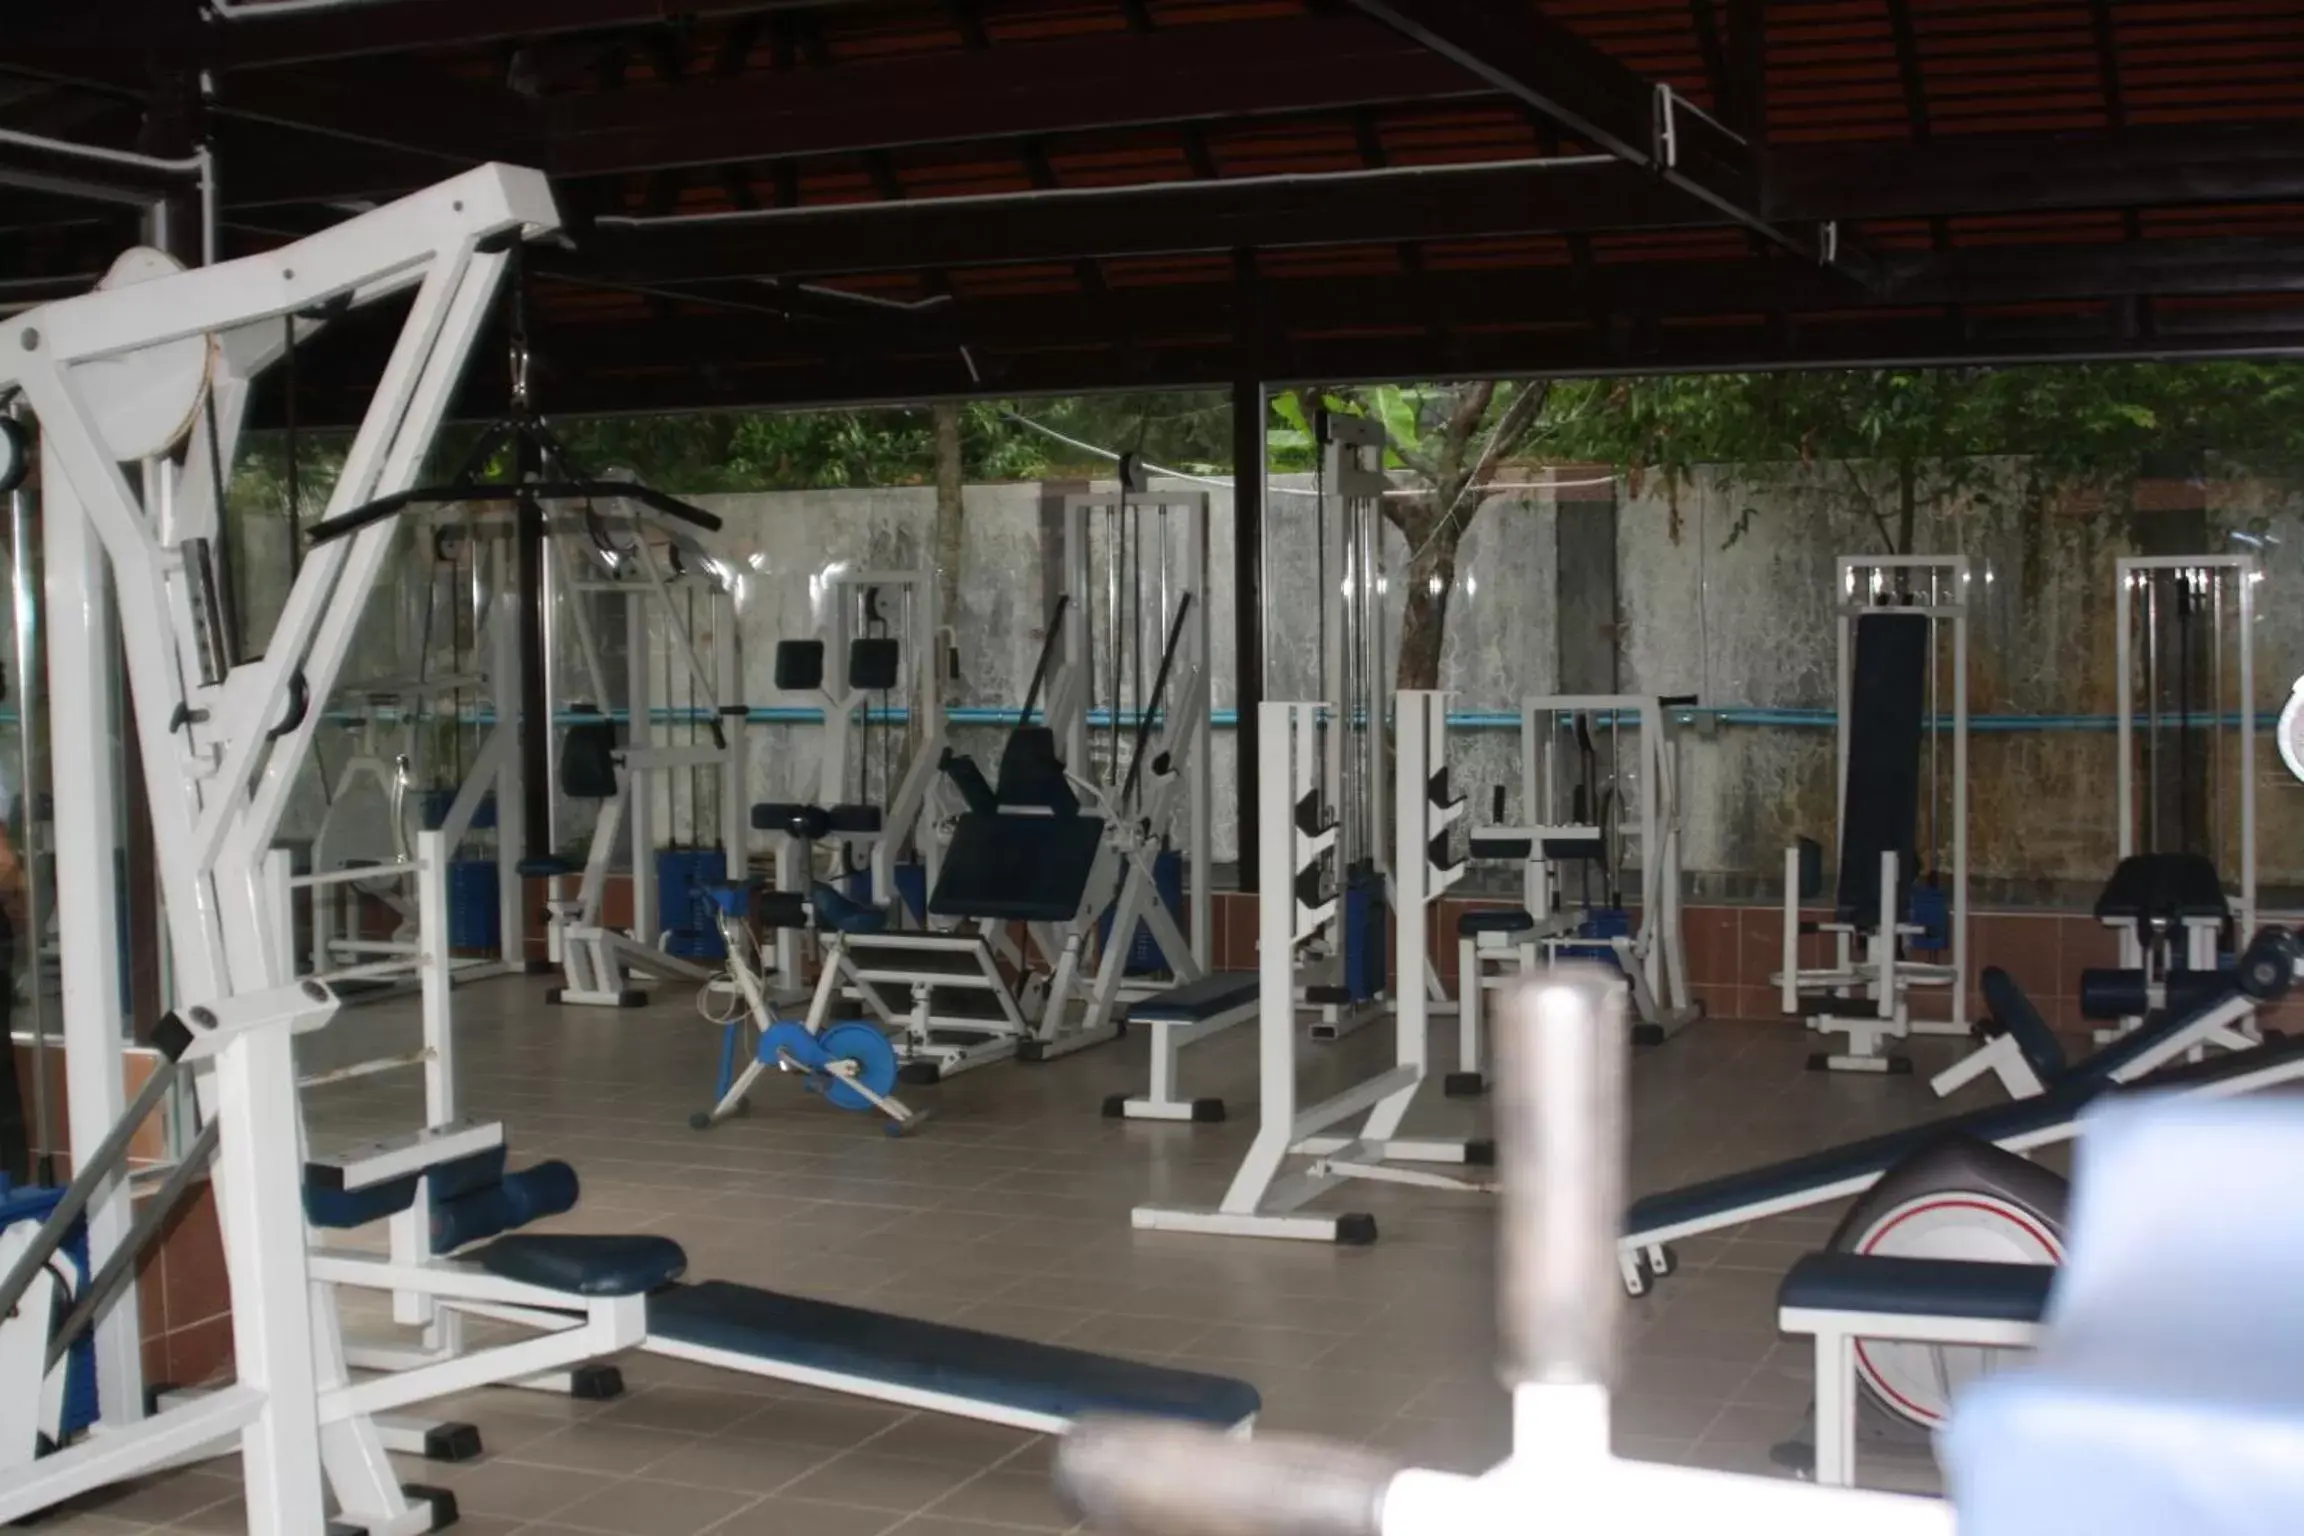 Fitness centre/facilities, Fitness Center/Facilities in Don Bosco Hotel School